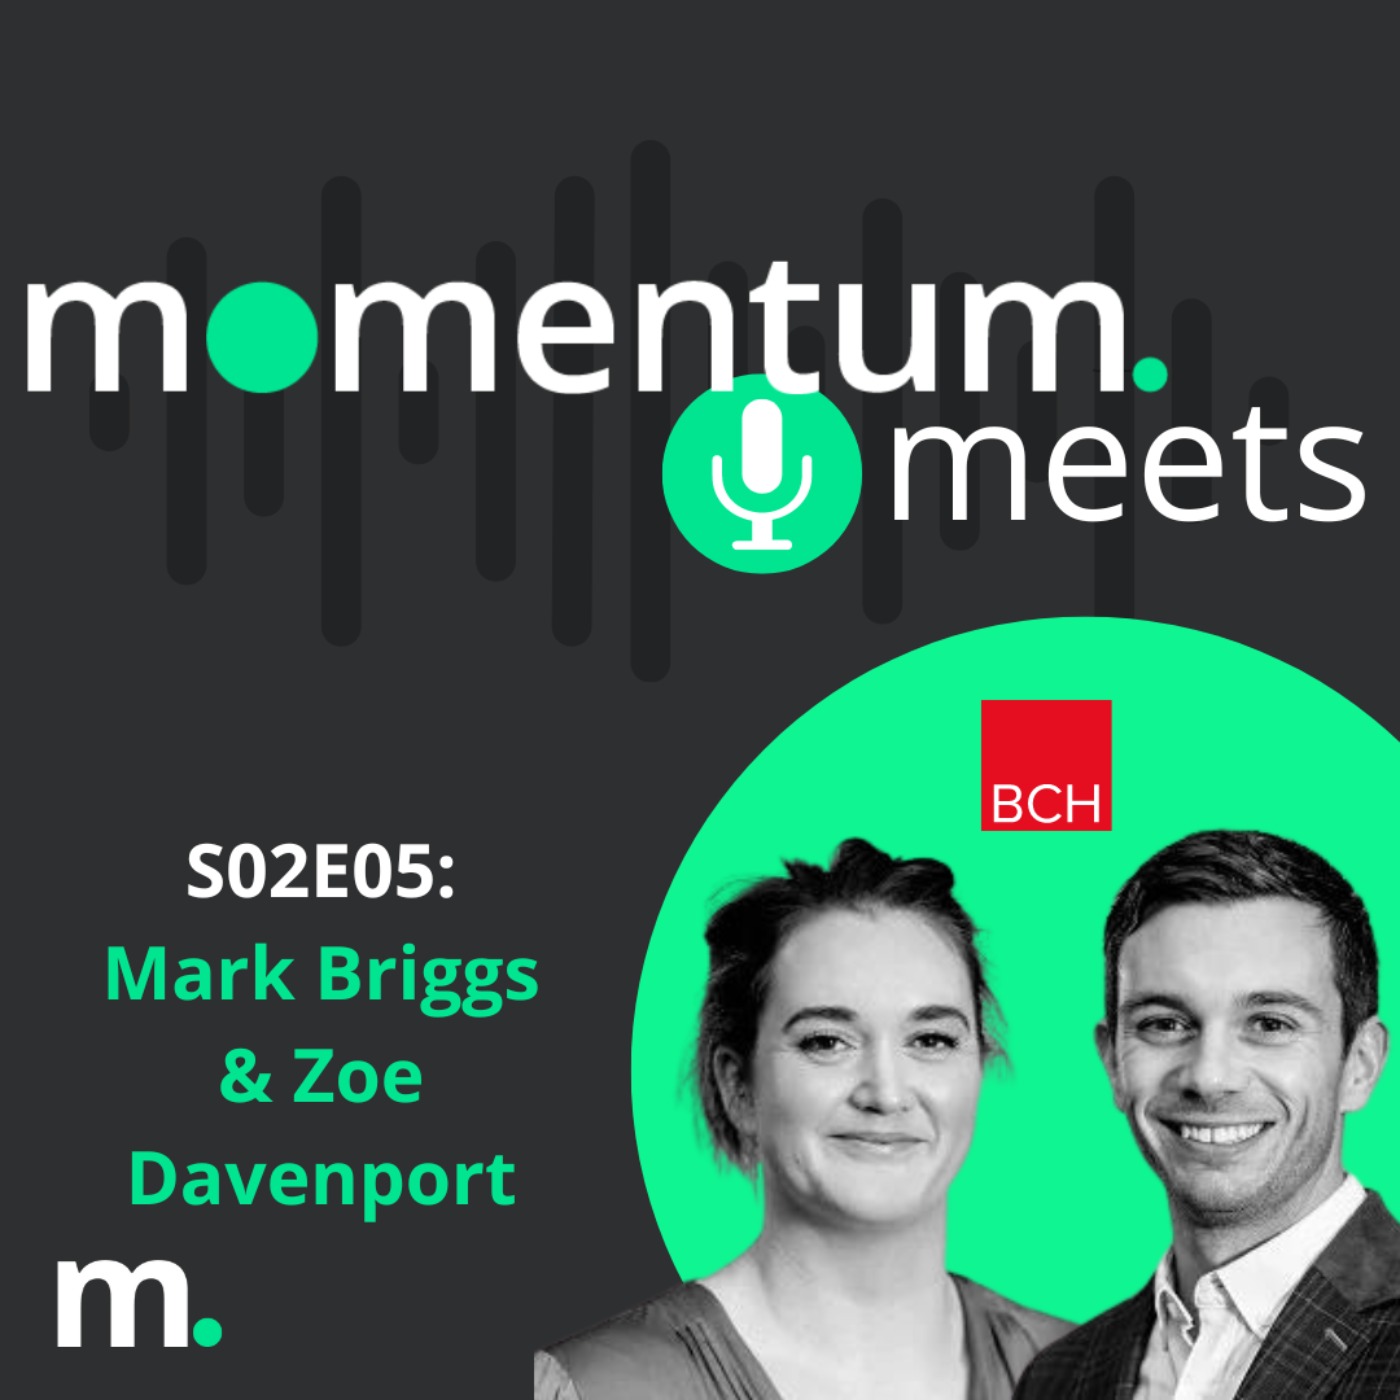 Momentum Meets: BCH's Mark Briggs & Zoe Davenport